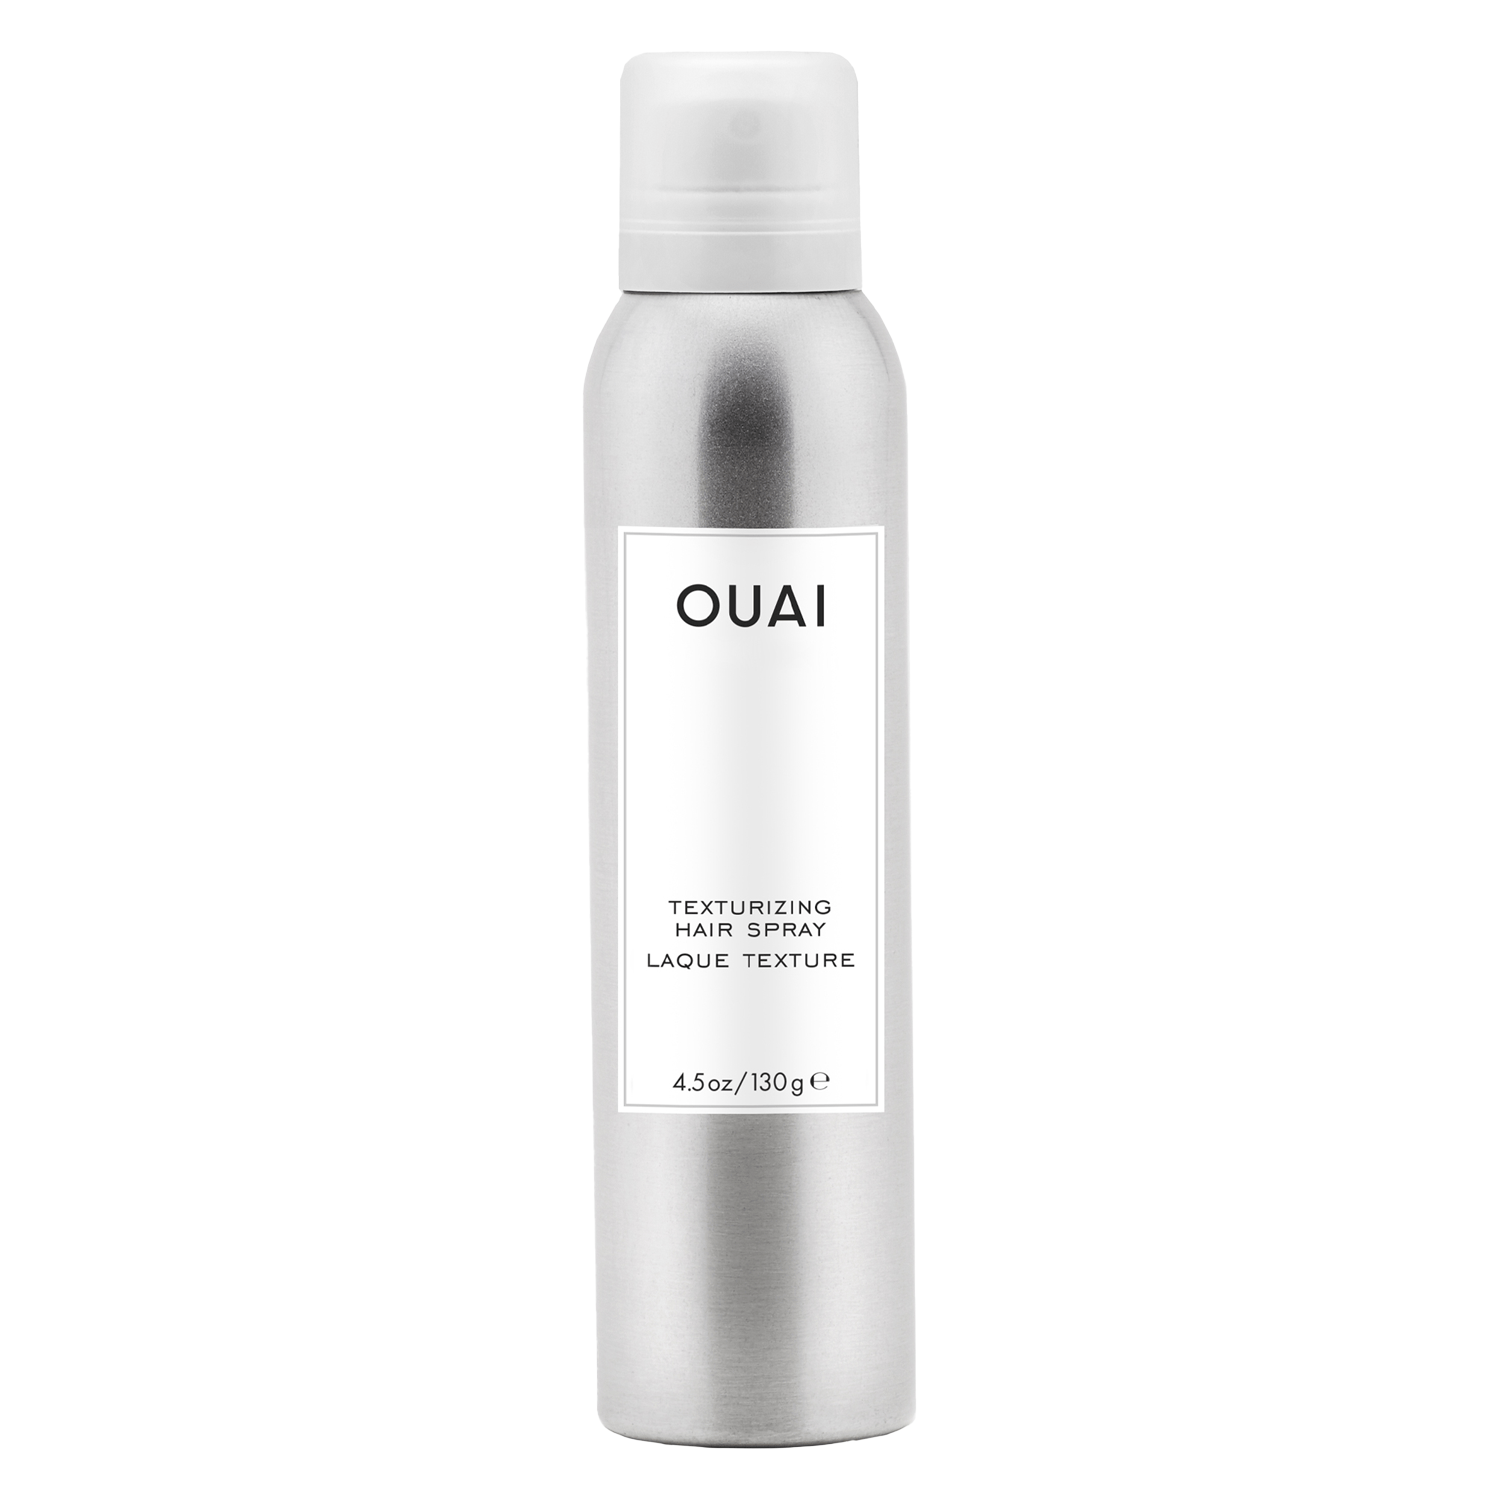 Produktbild von OUAI - Texturizing Hair Spray